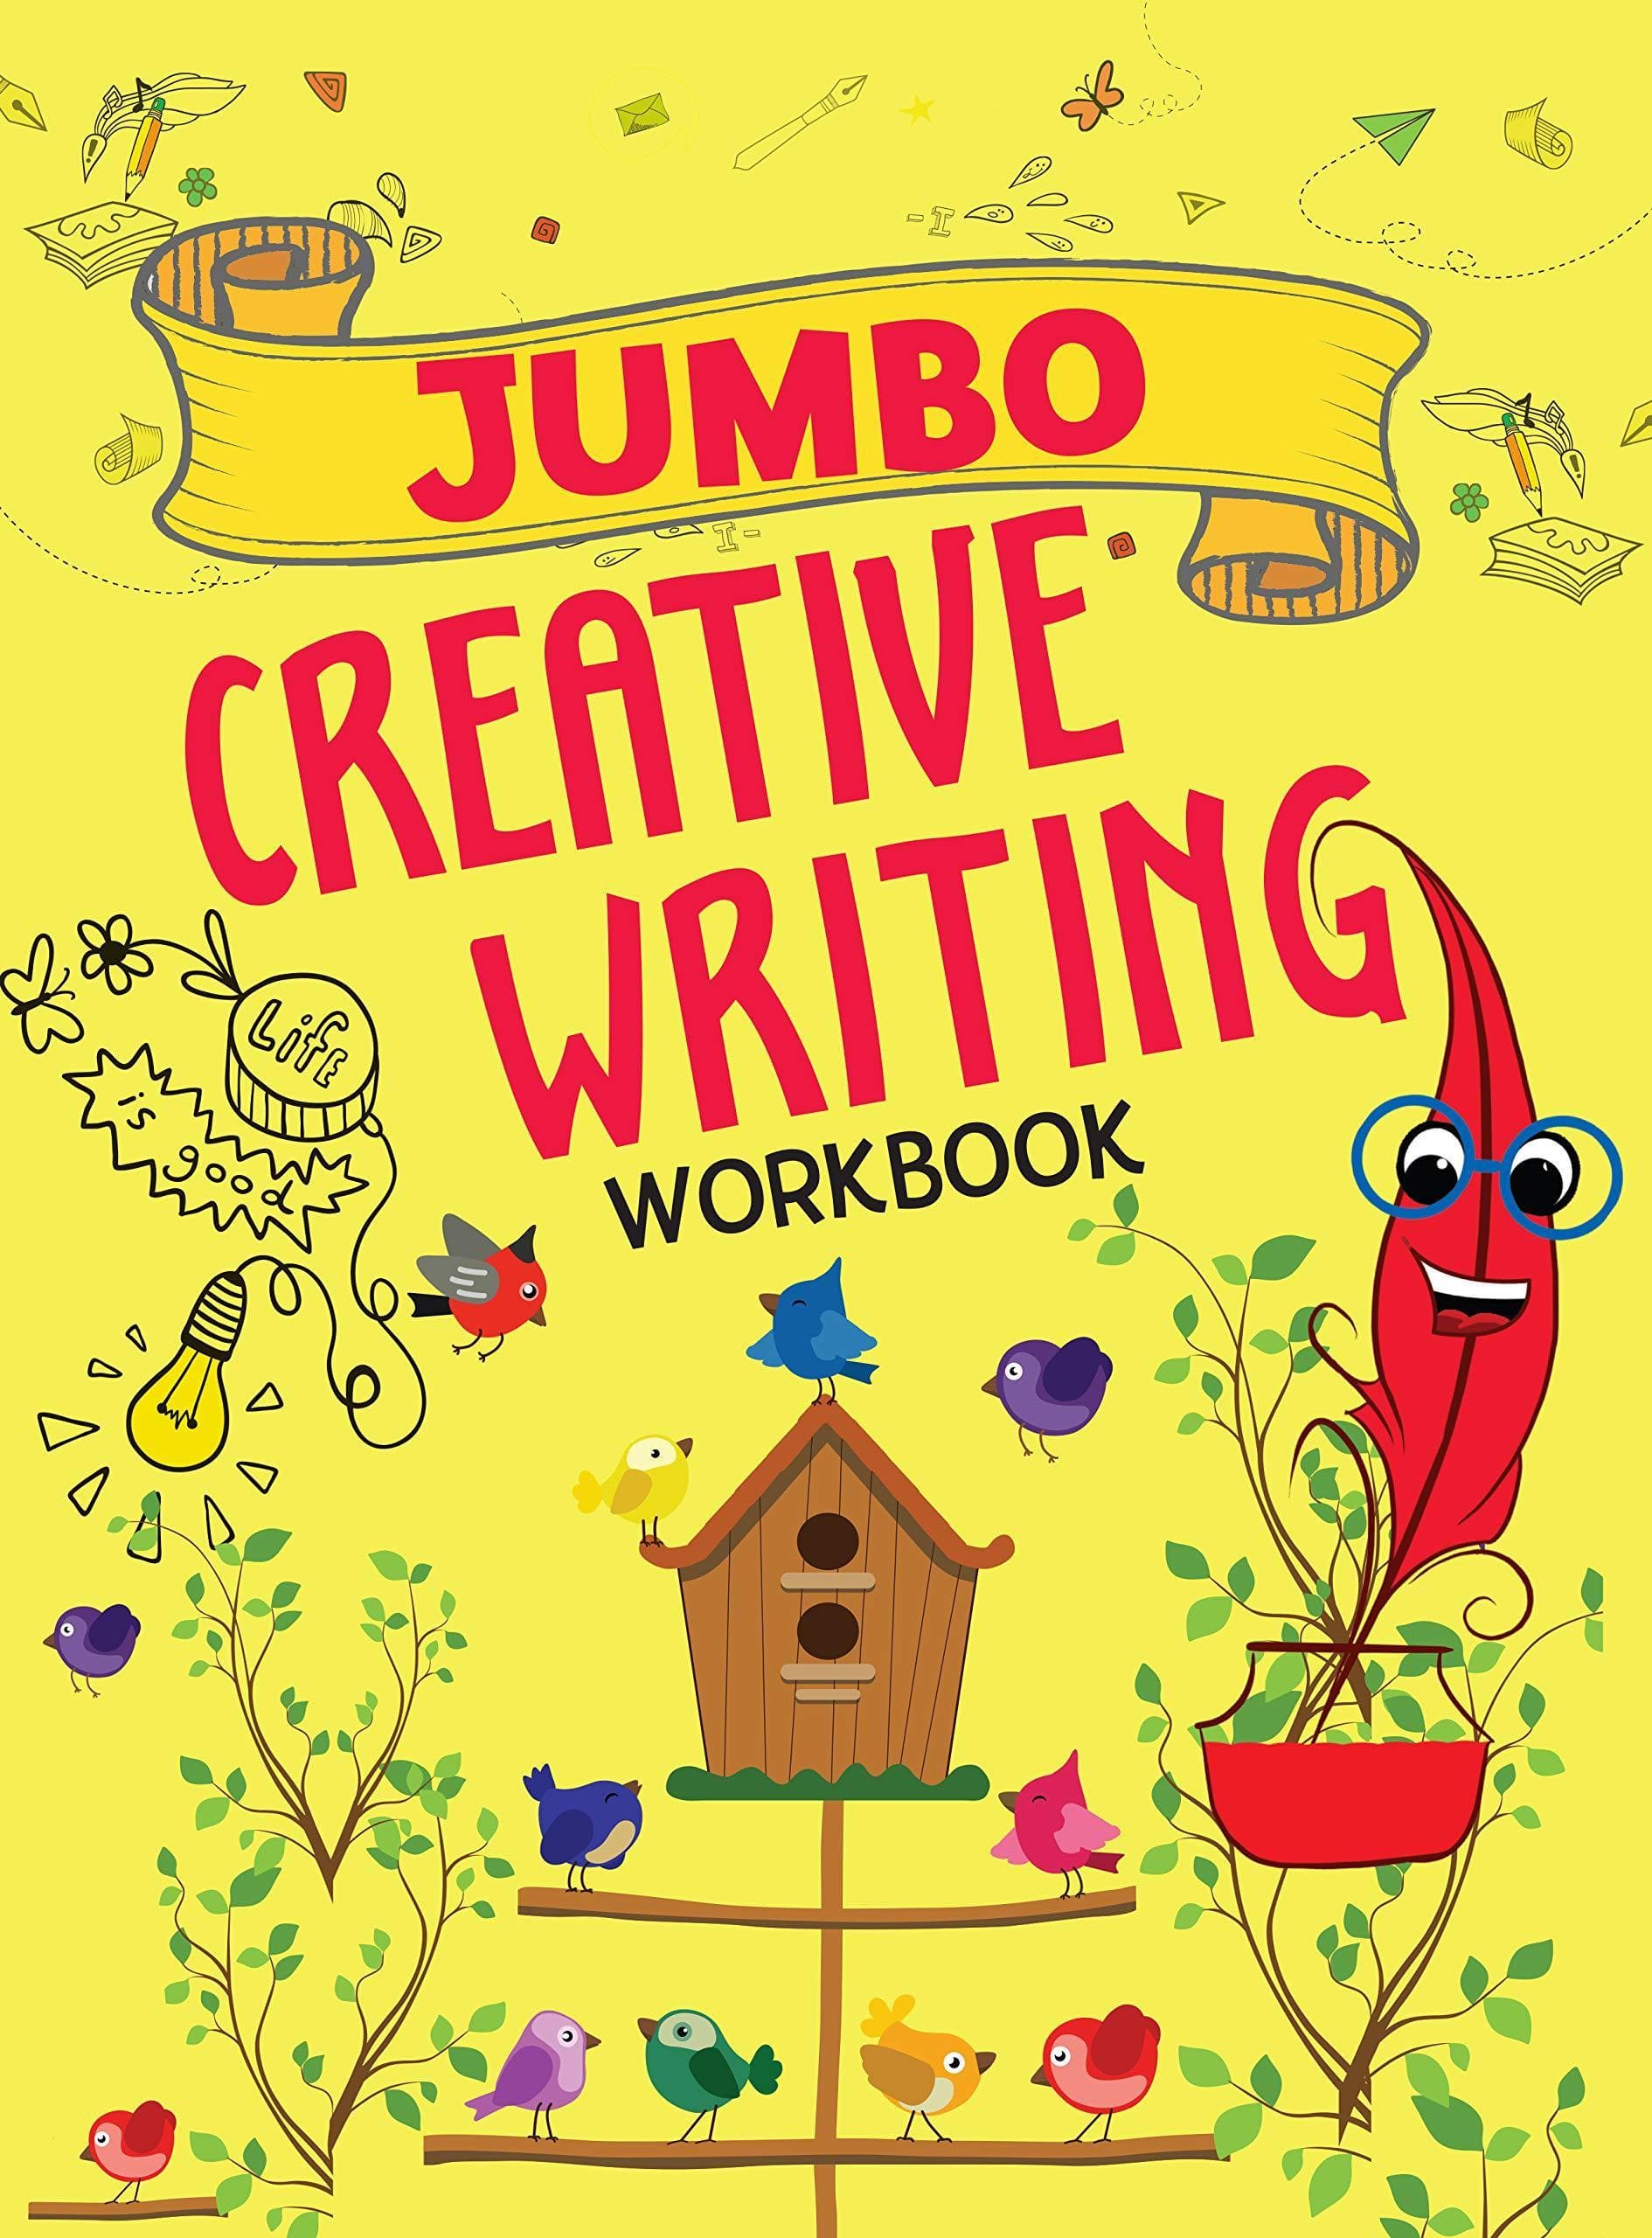 JUMBO CREATIVE WRITING WORKBOOK